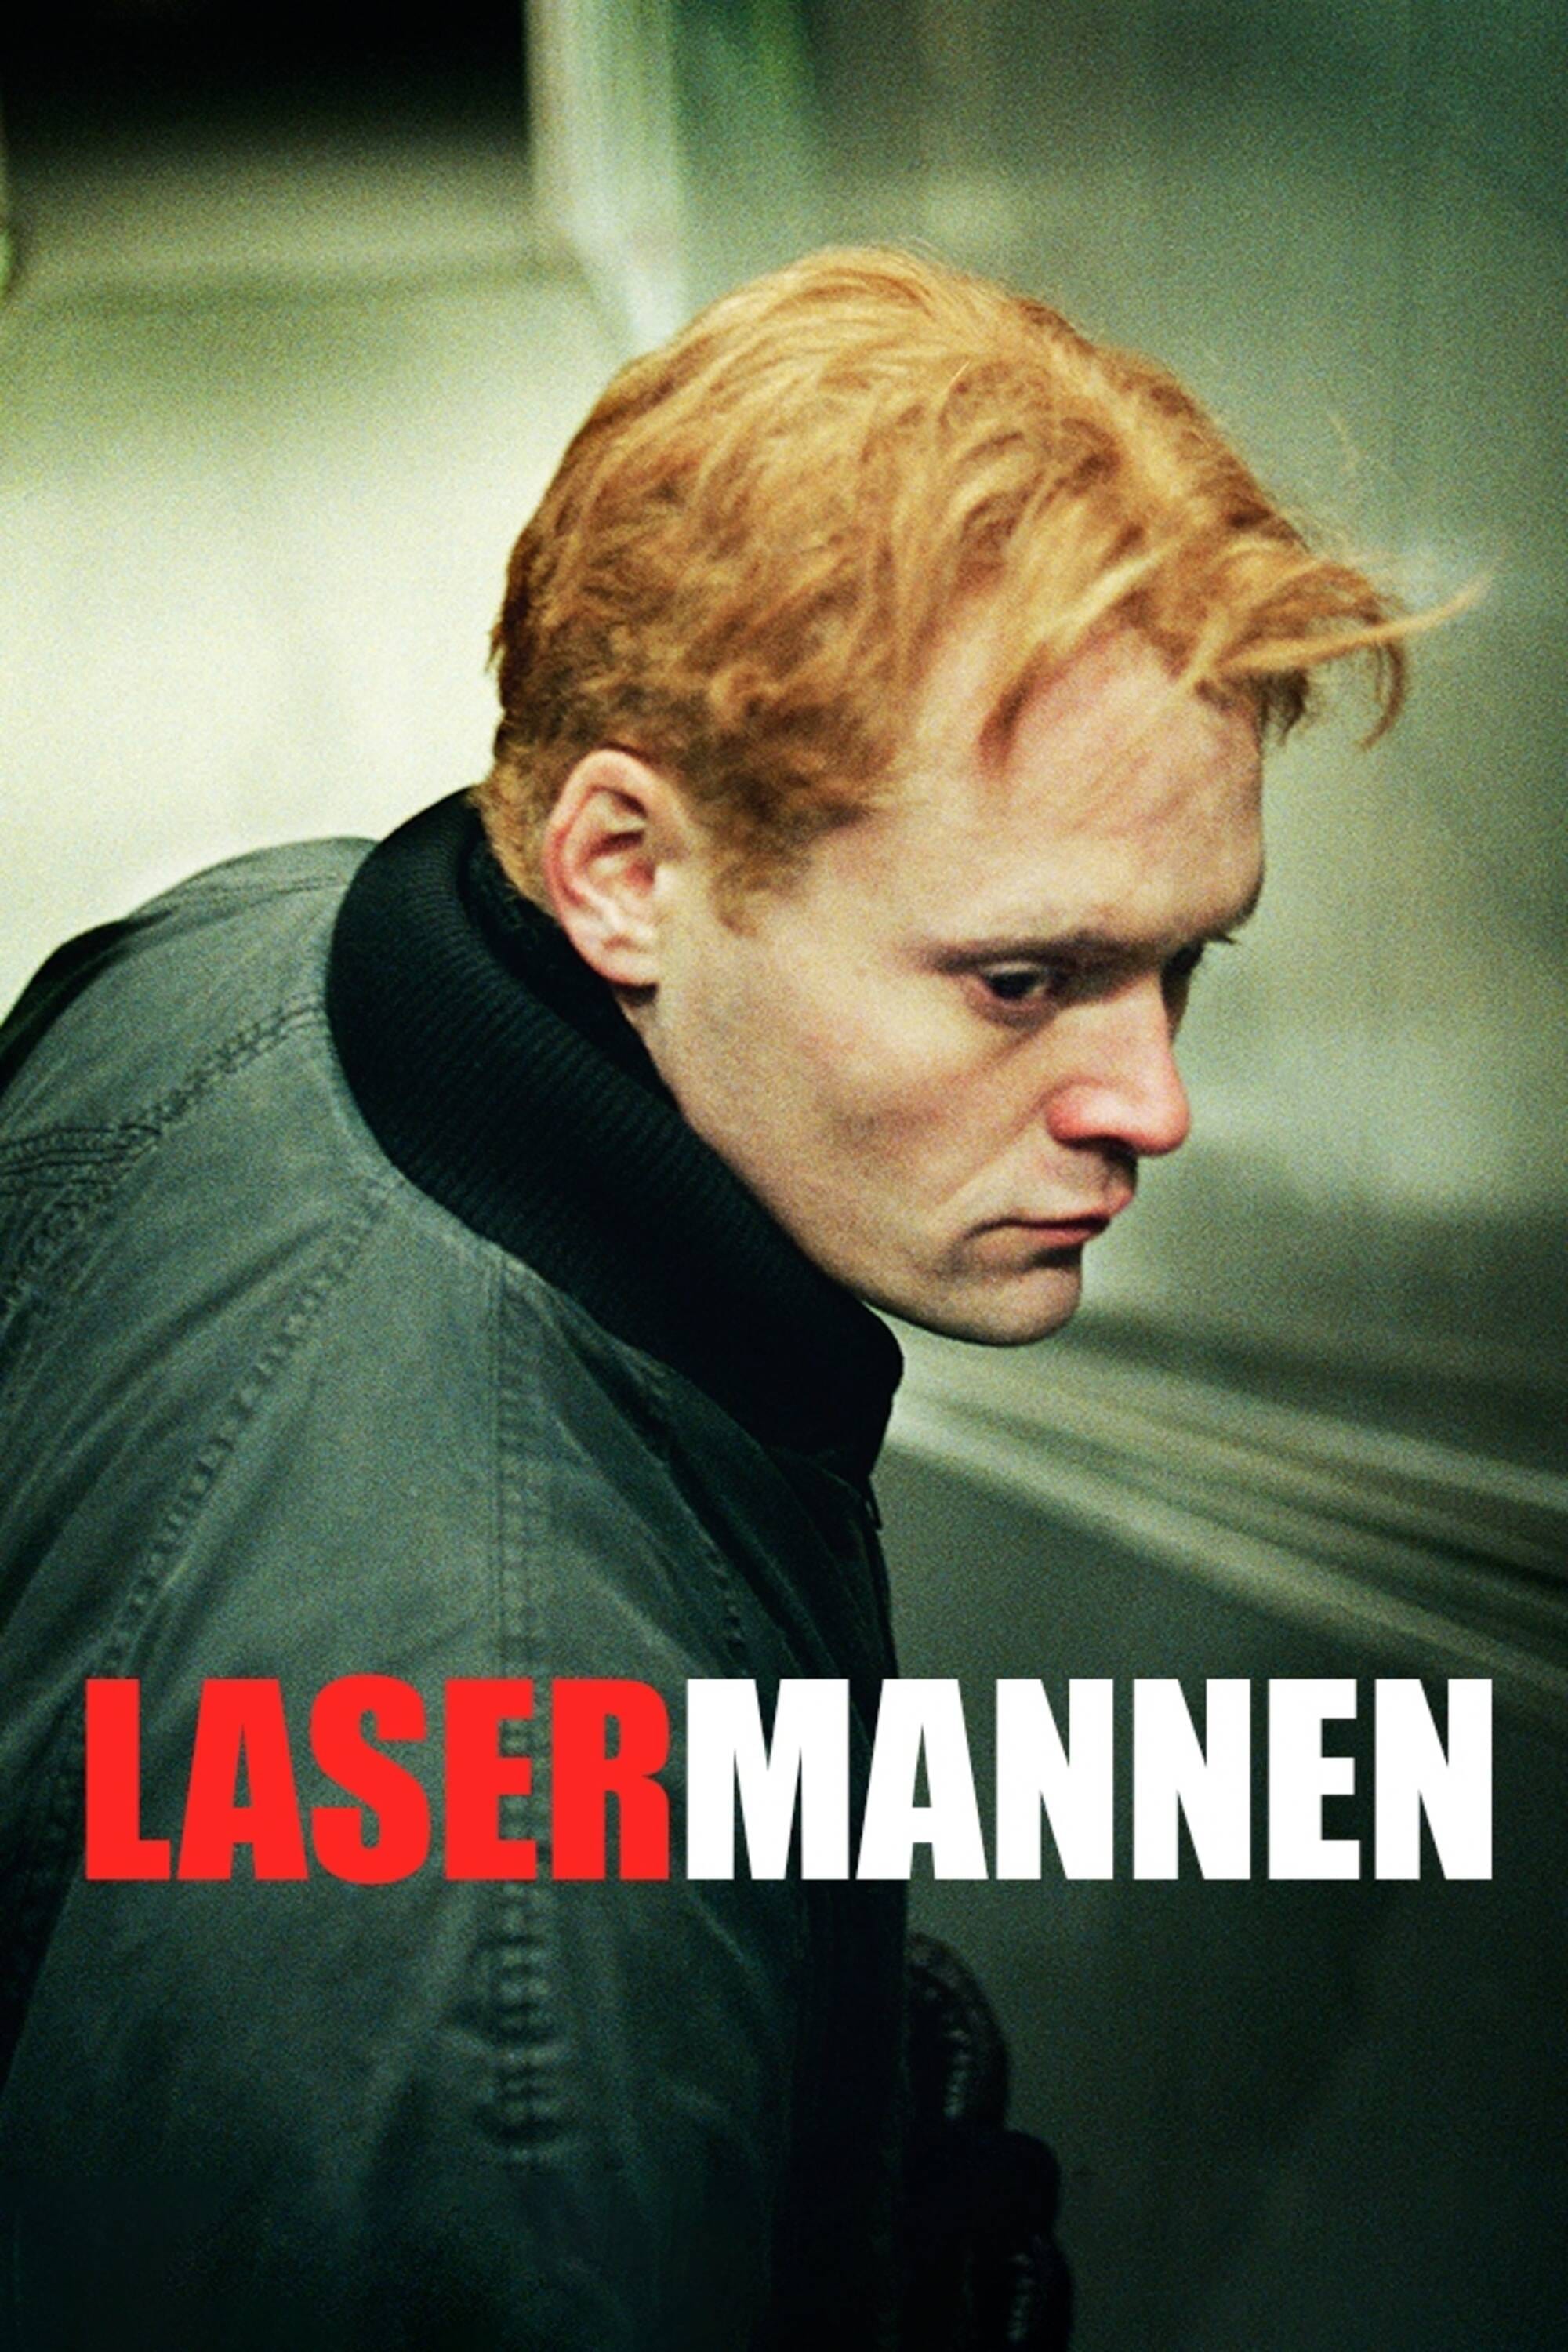 The Laser Man (2005)